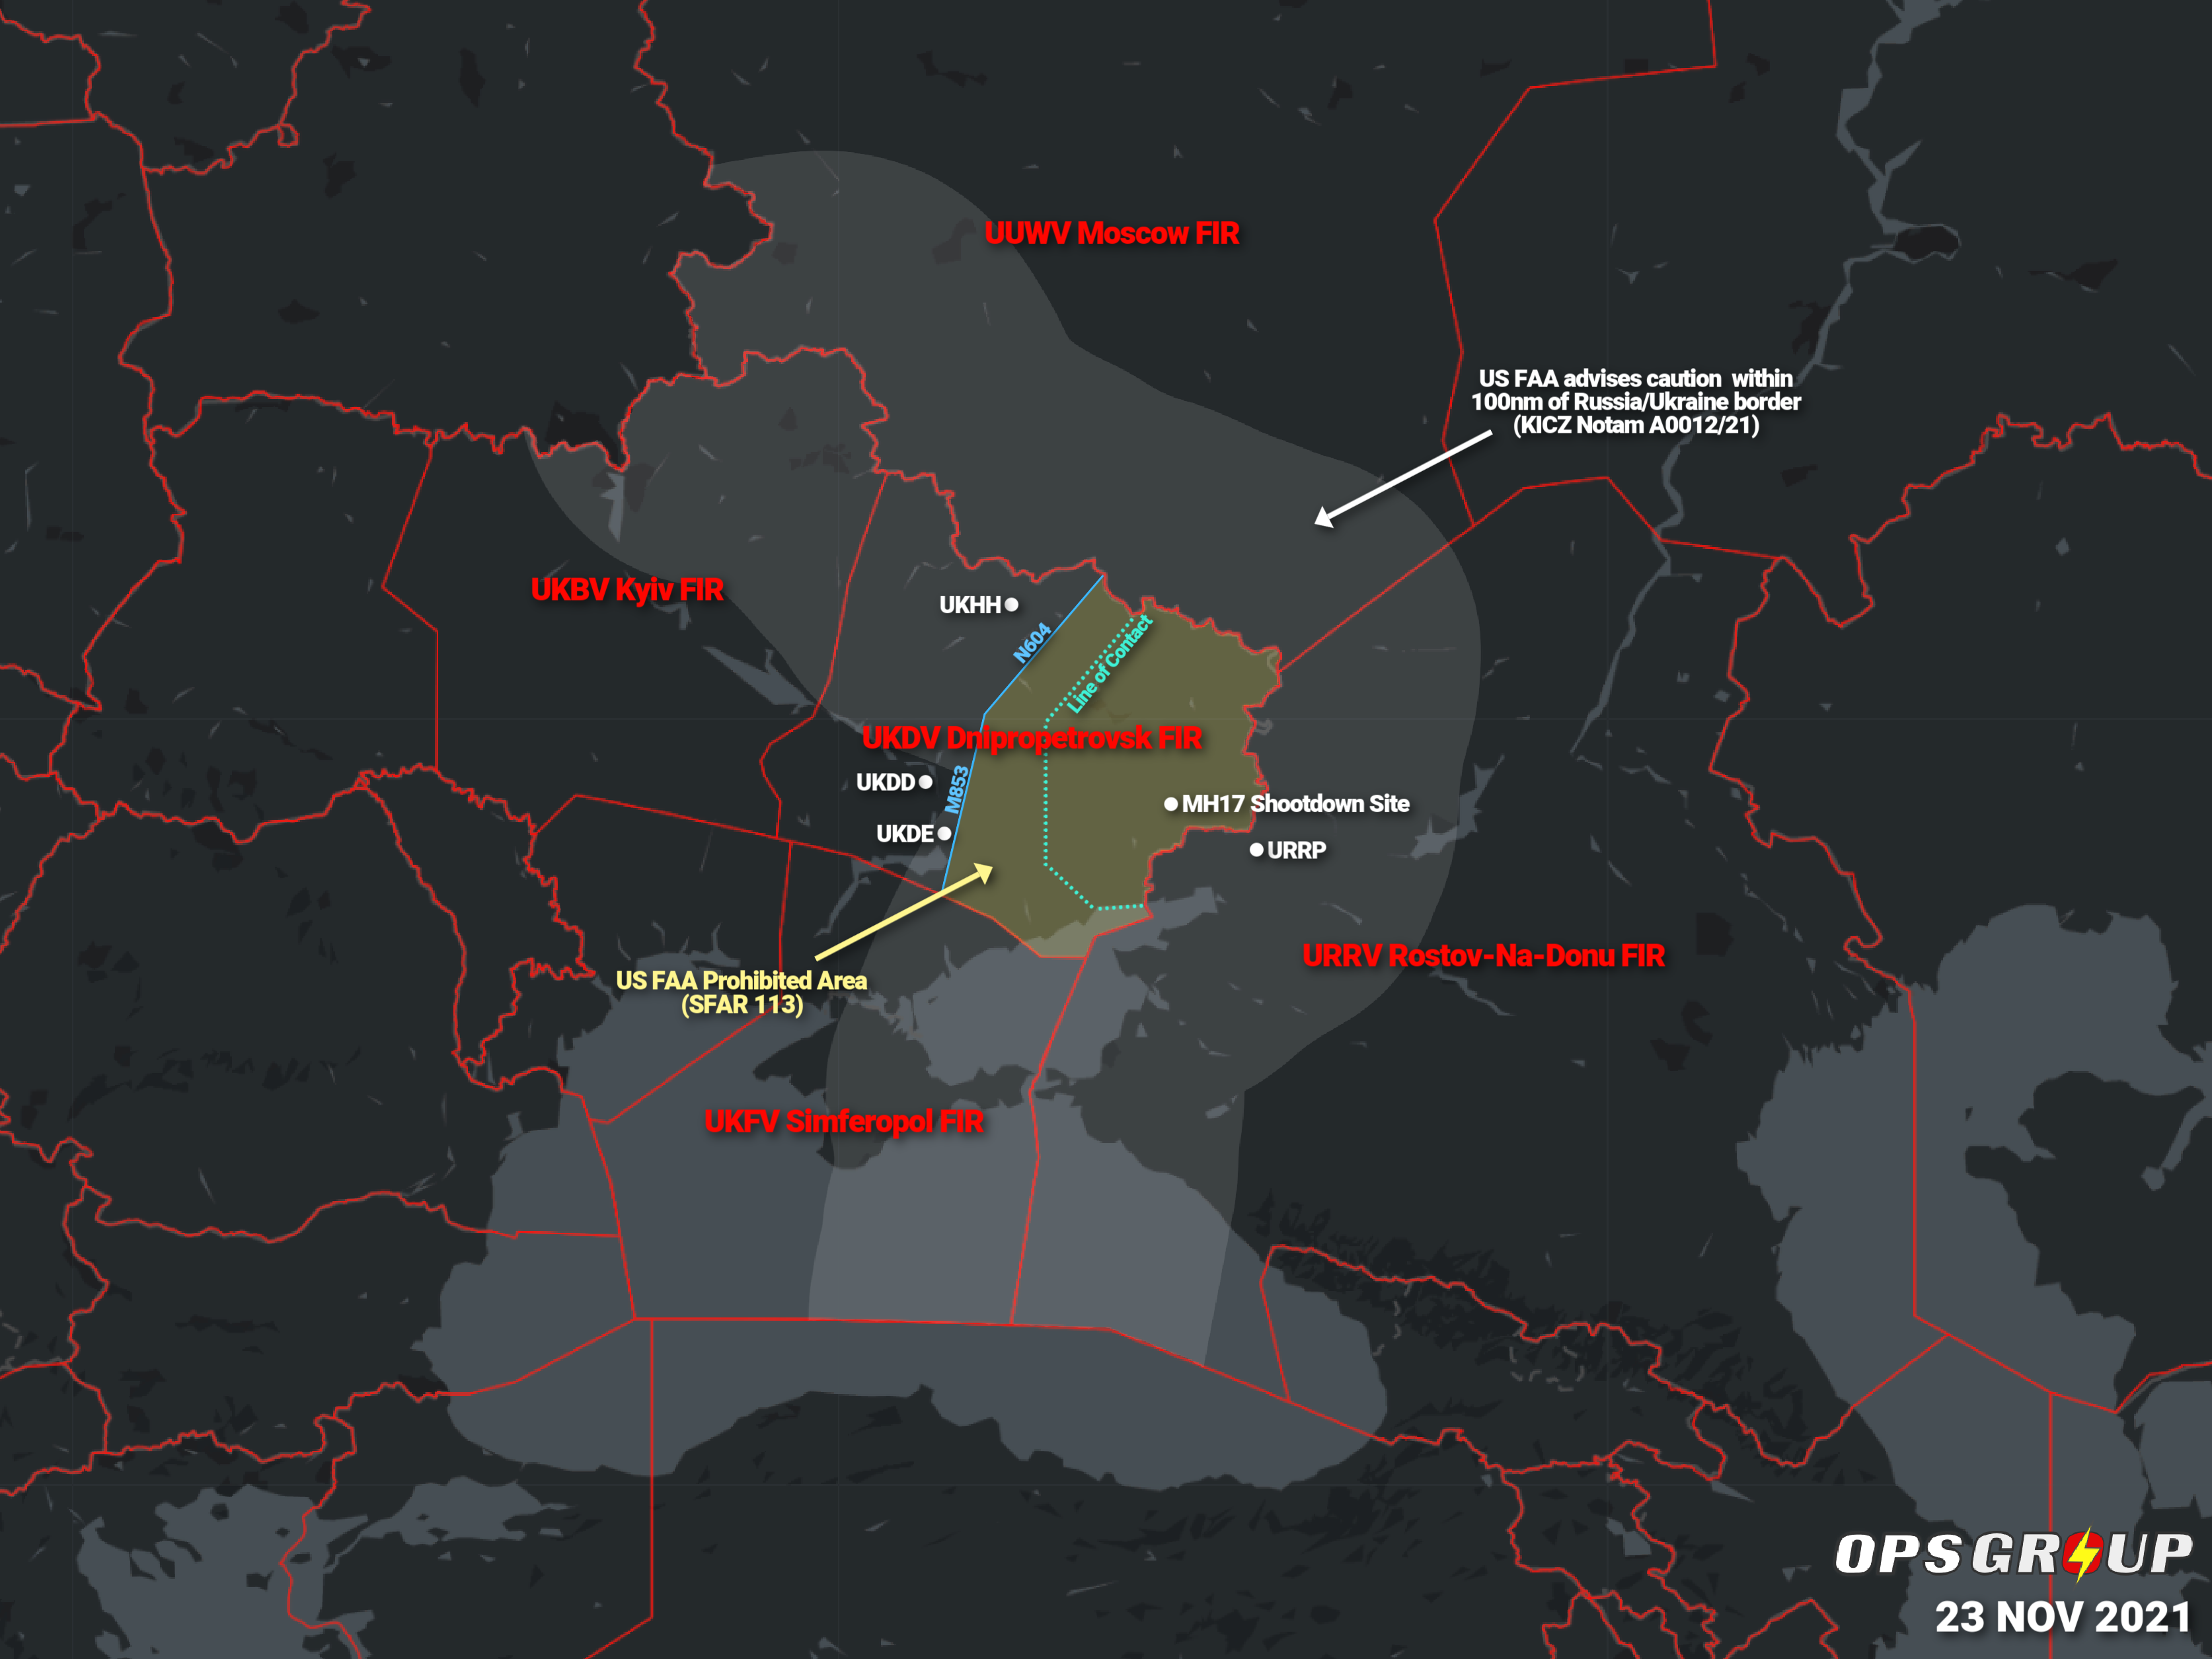 Airspace update: The Russia-Ukraine border conflict